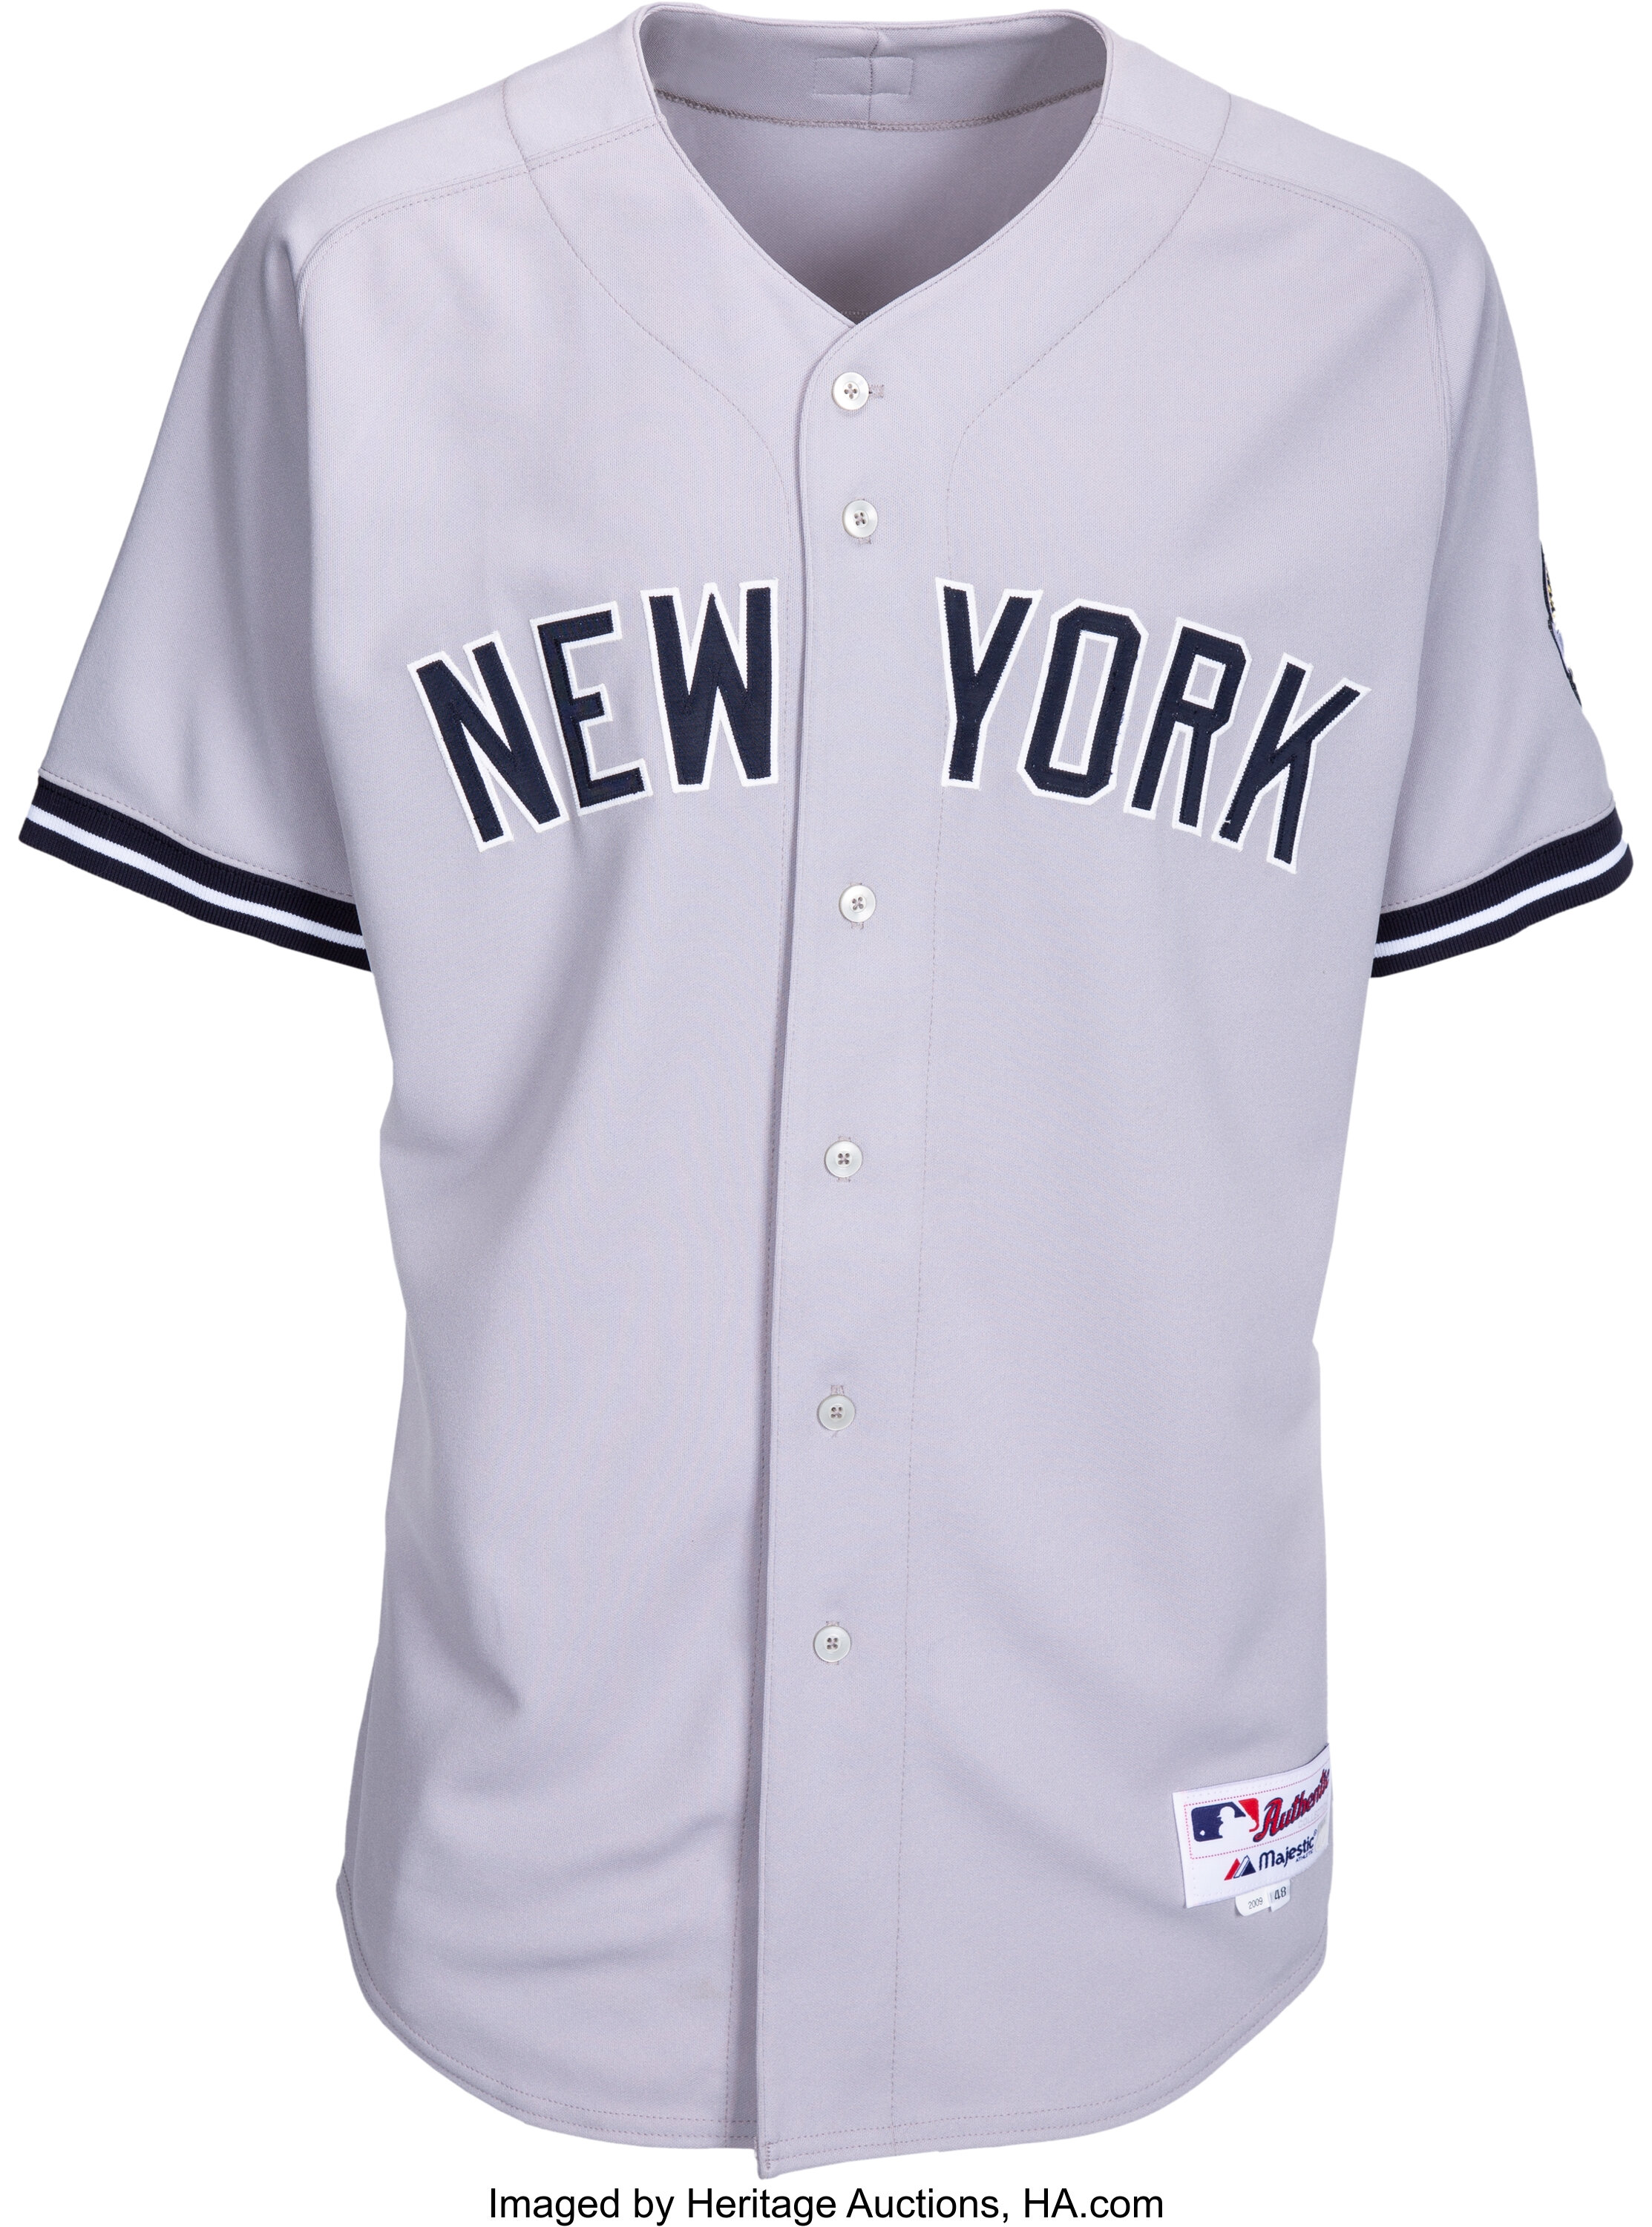 Derek Jeter New York Yankees Jersey Number Kit, Authentic Home